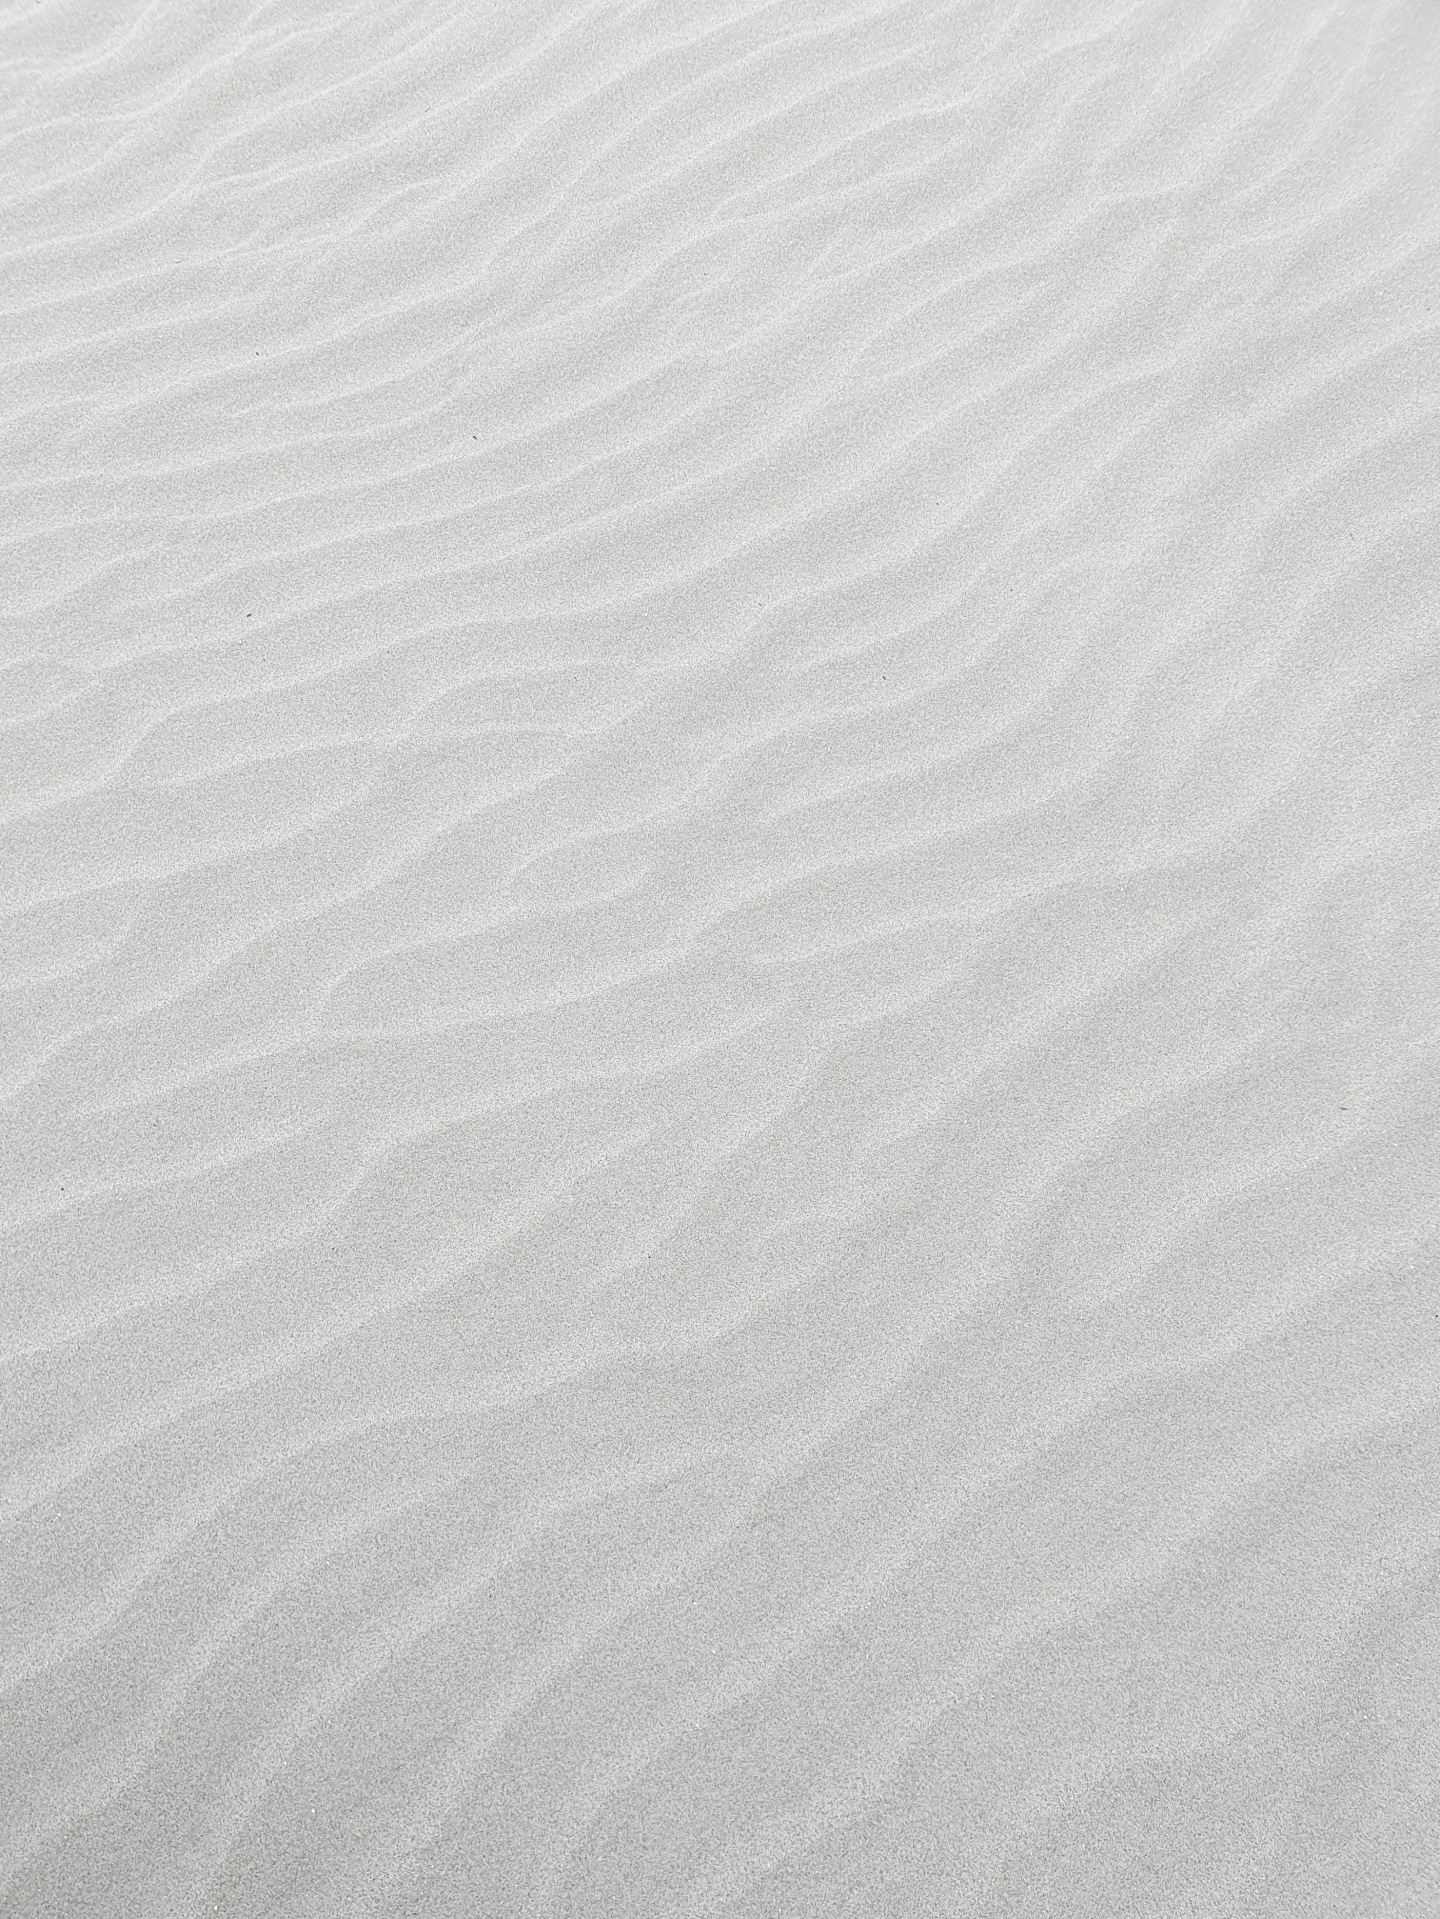 White beach sand background image